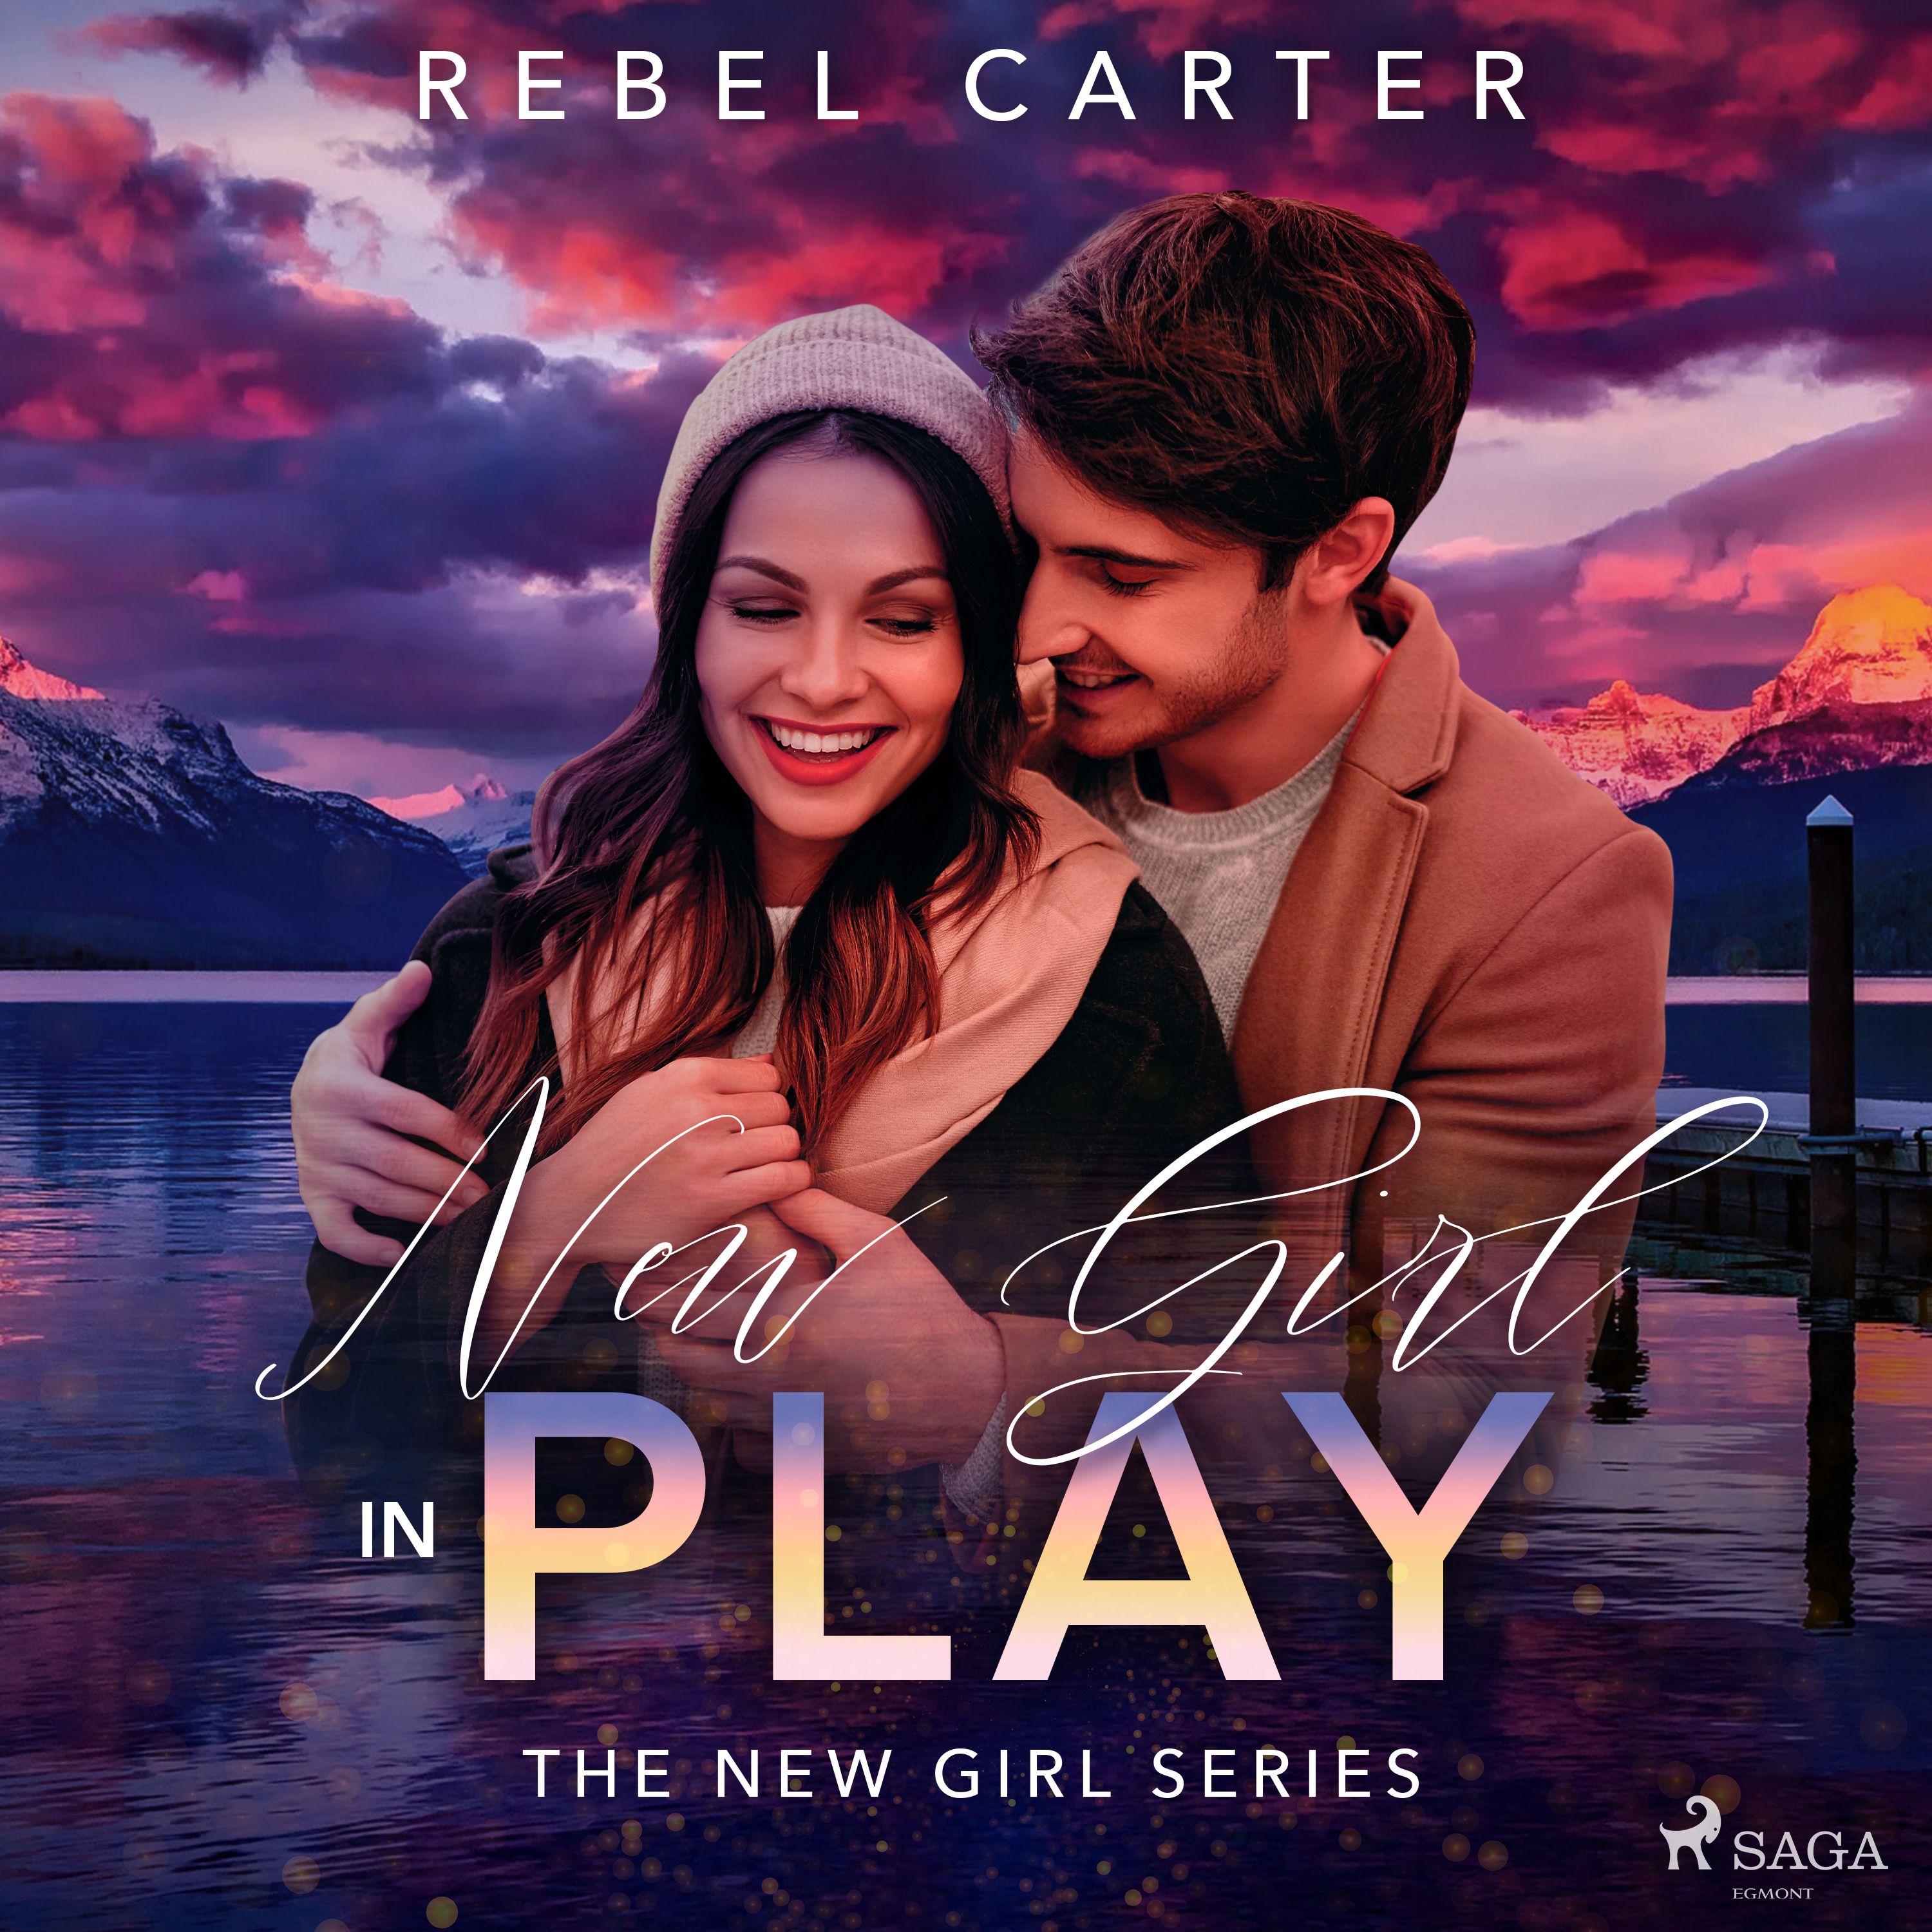 New Girl In Play, ljudbok av Rebel Carter